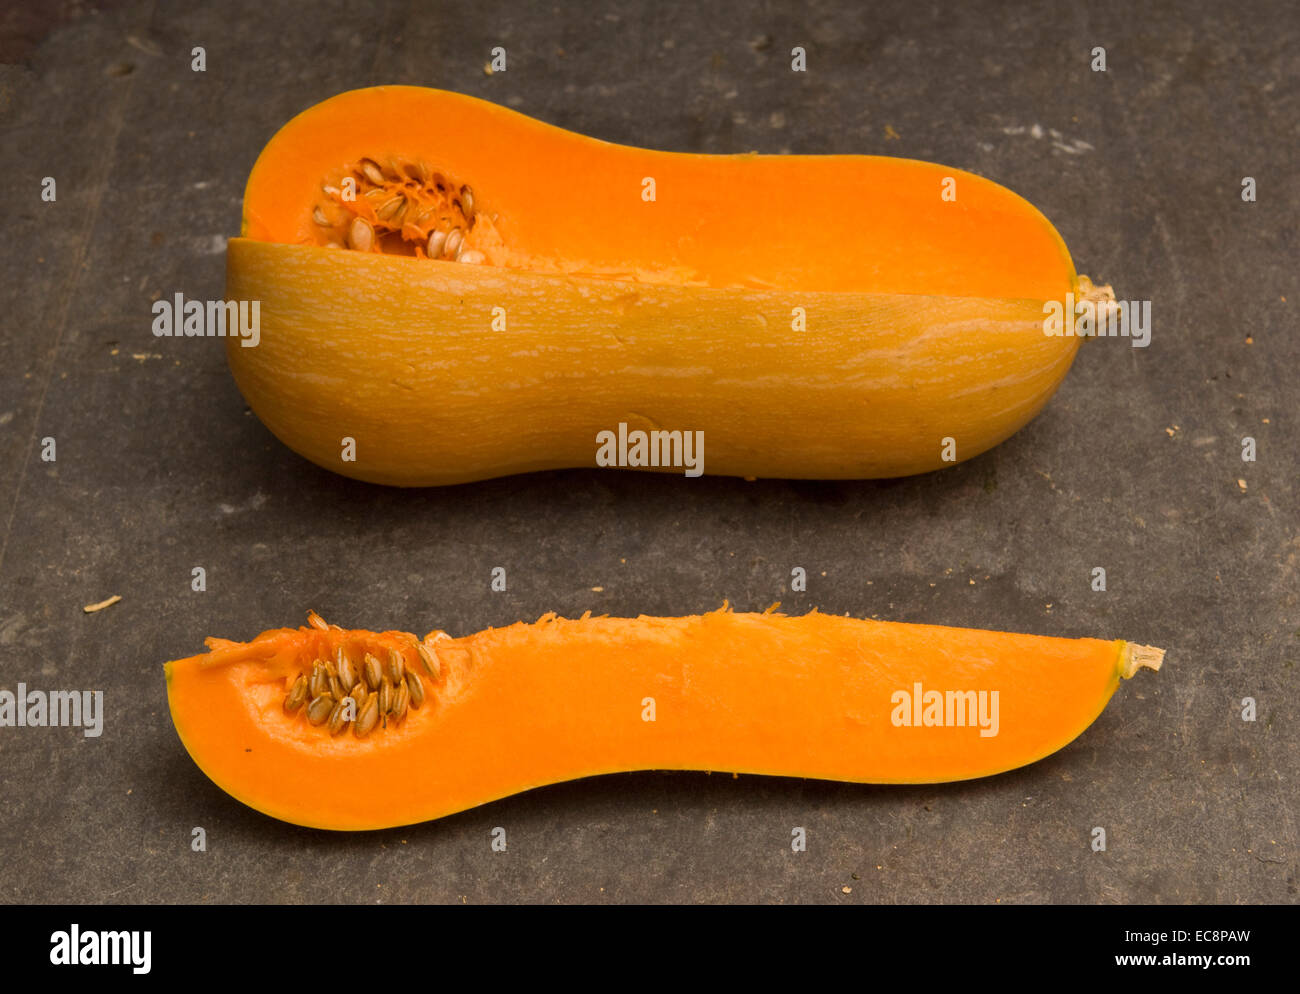 Pumpkins and squashes. Butternu Squash Stock Photo